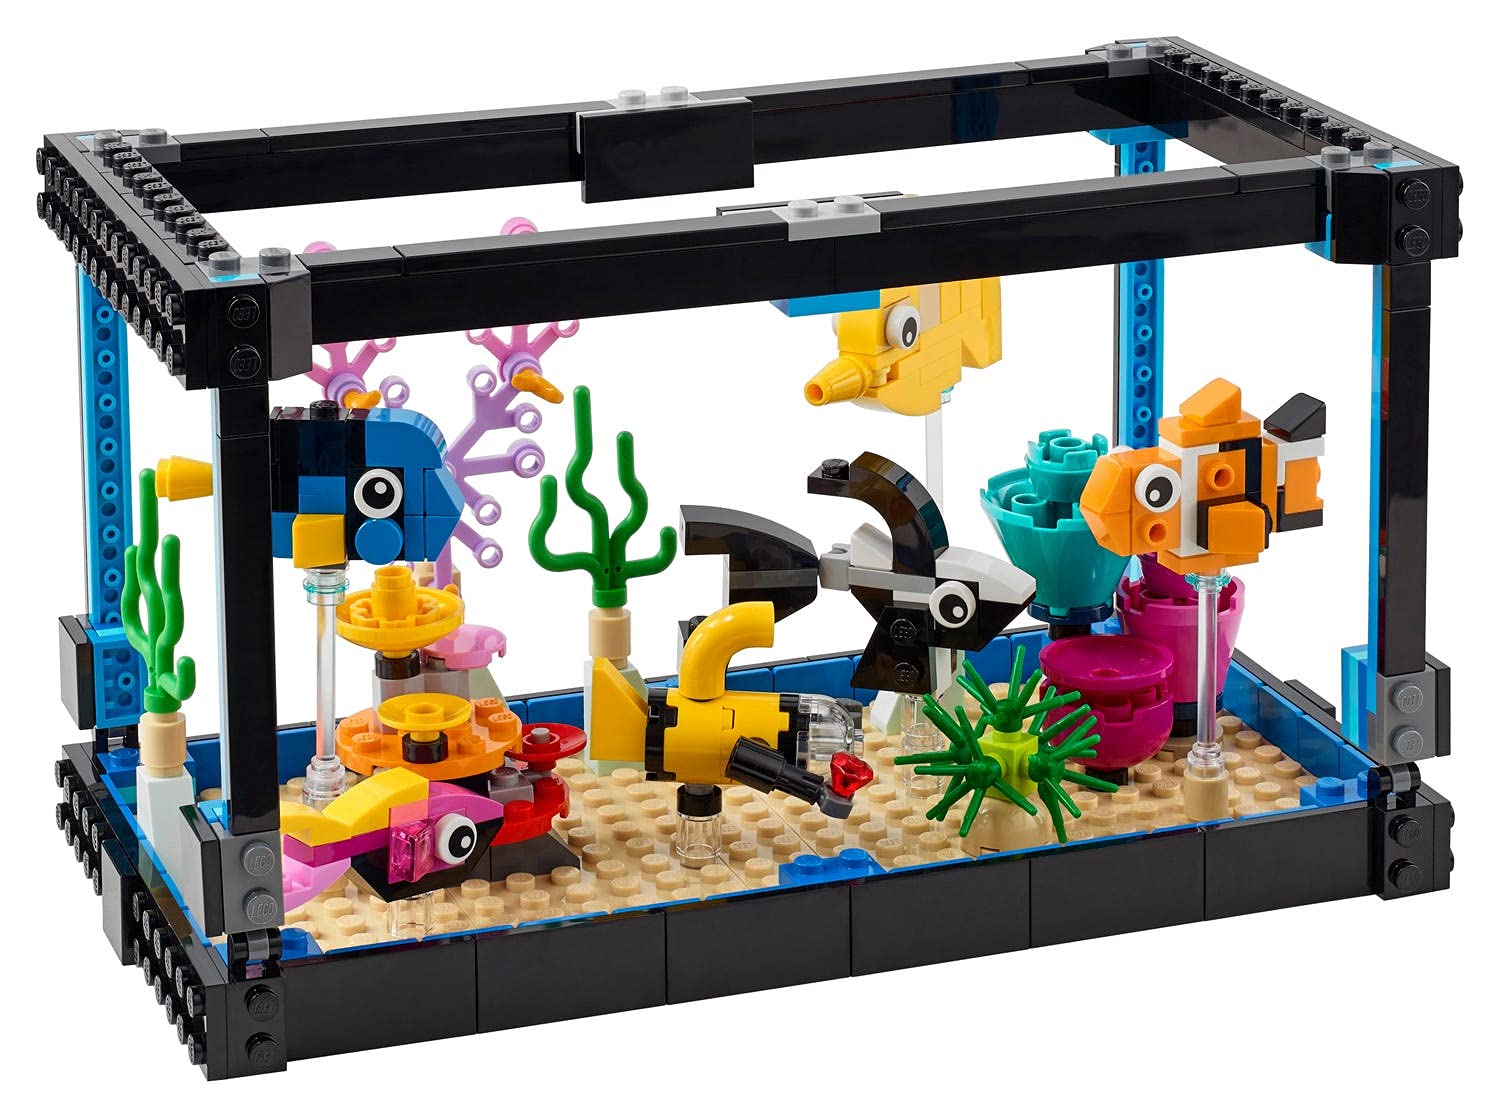 Lego Creator Fish Tank 31122 Exclusive 3-in-1 Building Set